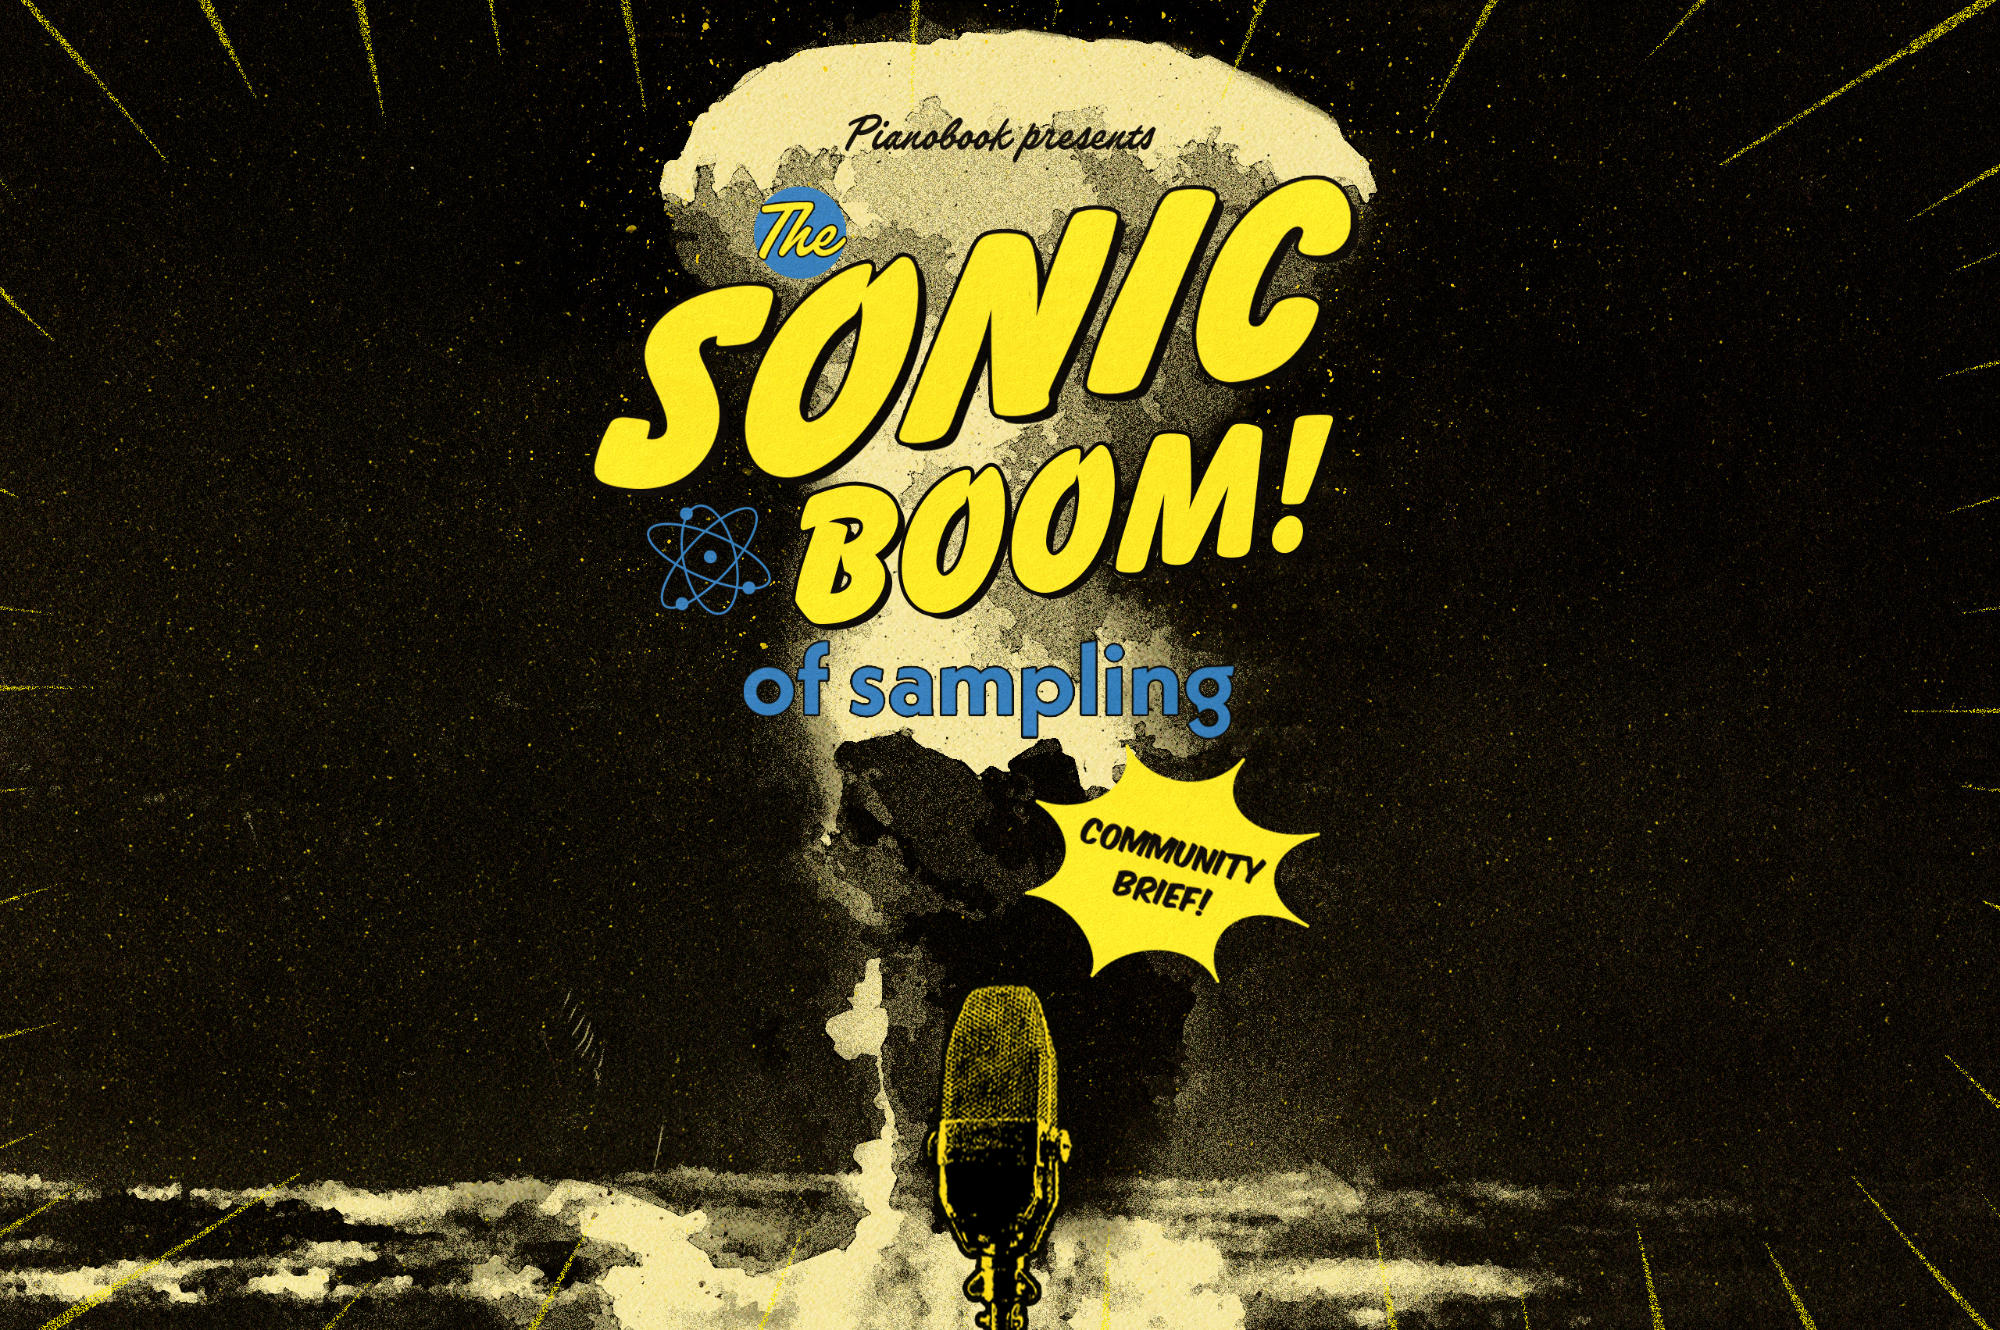 Pianobook presents The Sonic Boom of sampling. Community brief.